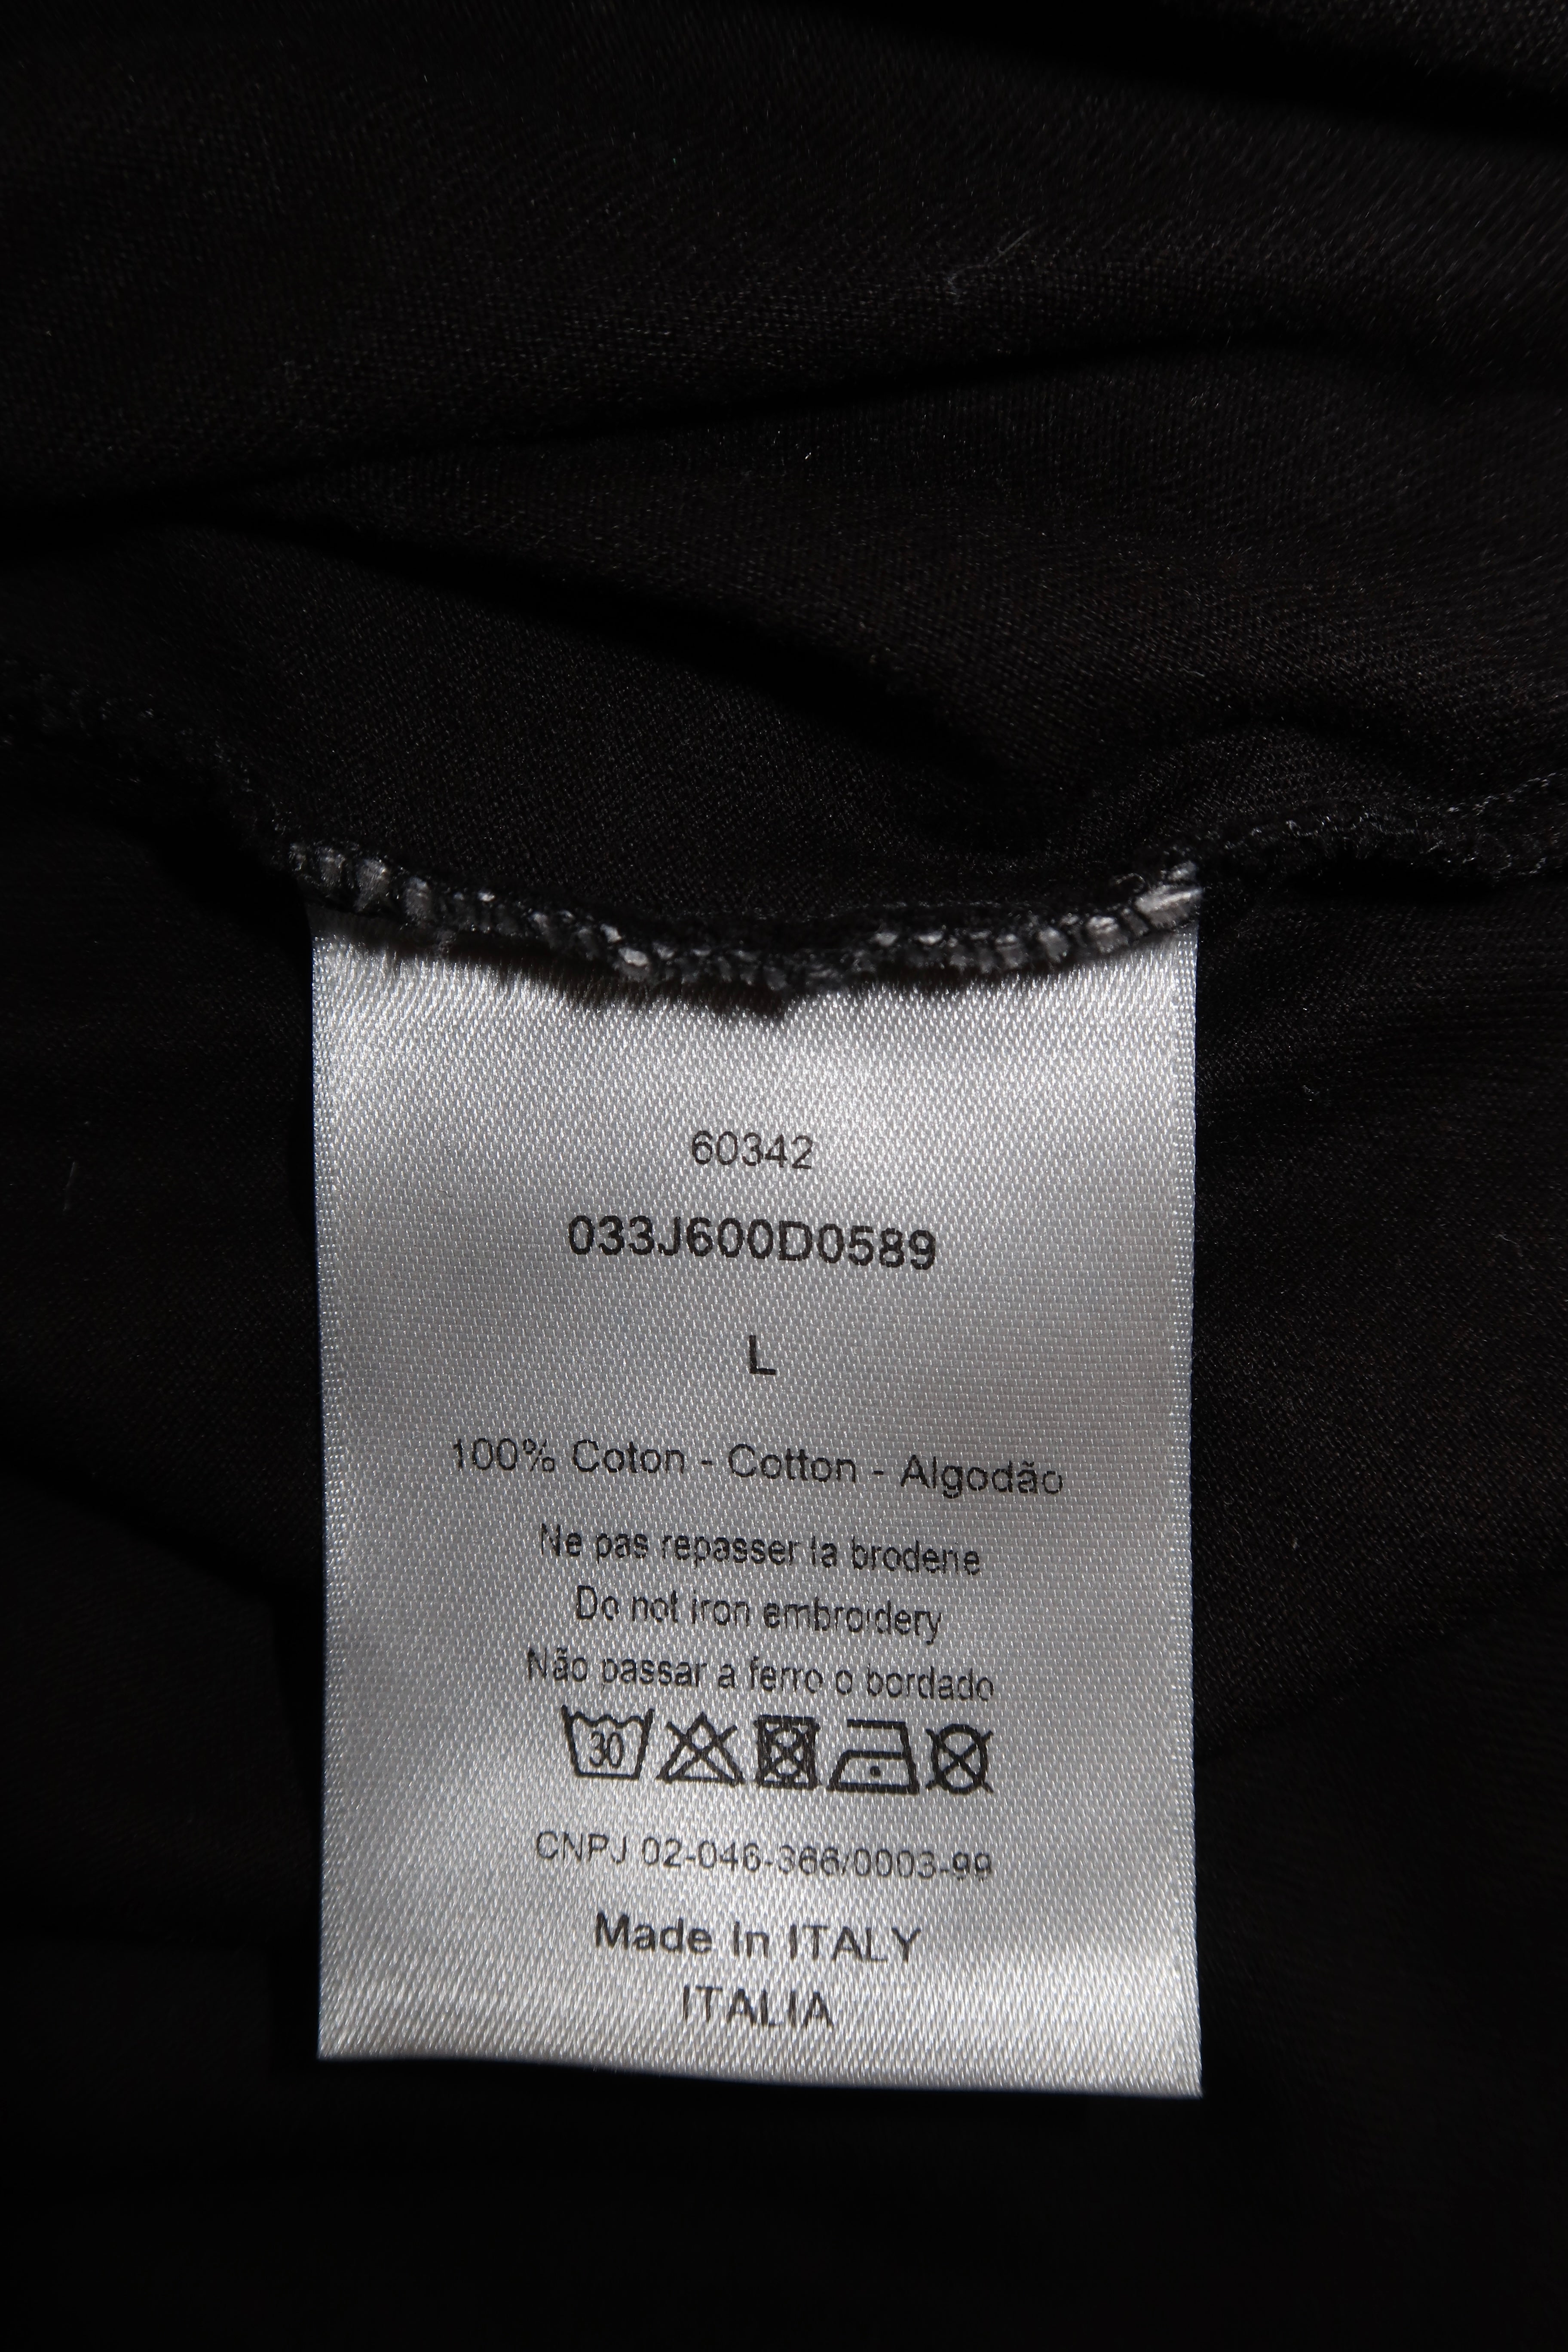 Dior x Shawn Stussy Logo T-Shirt Size Large